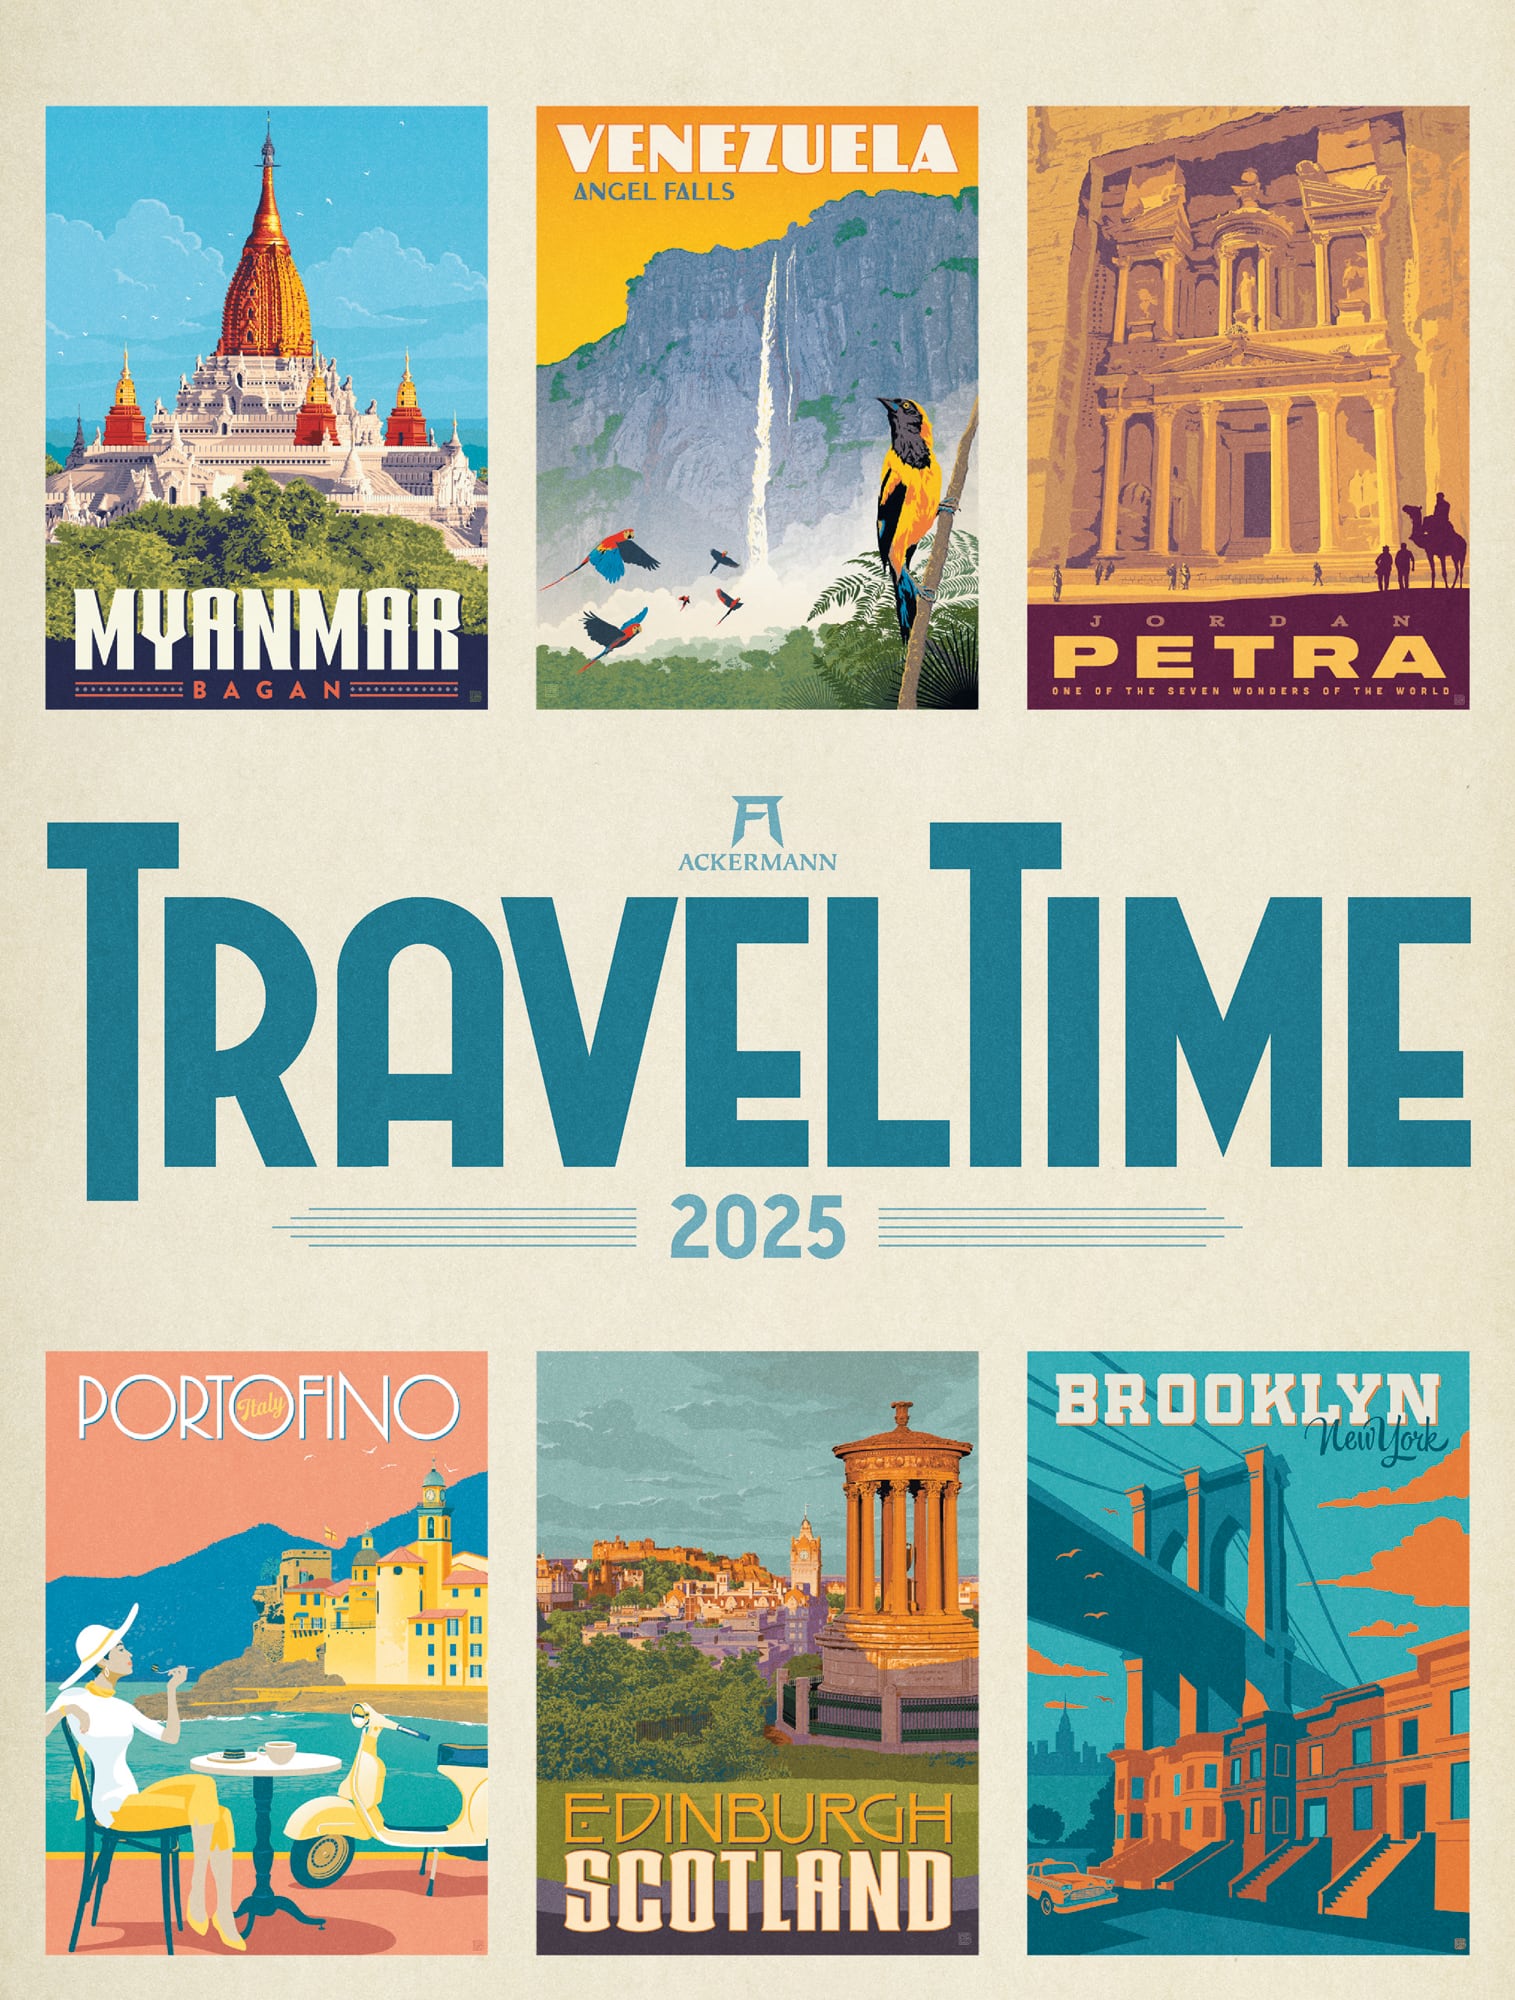 Ackermann Calendar Travel Time 2025 - Cover Page